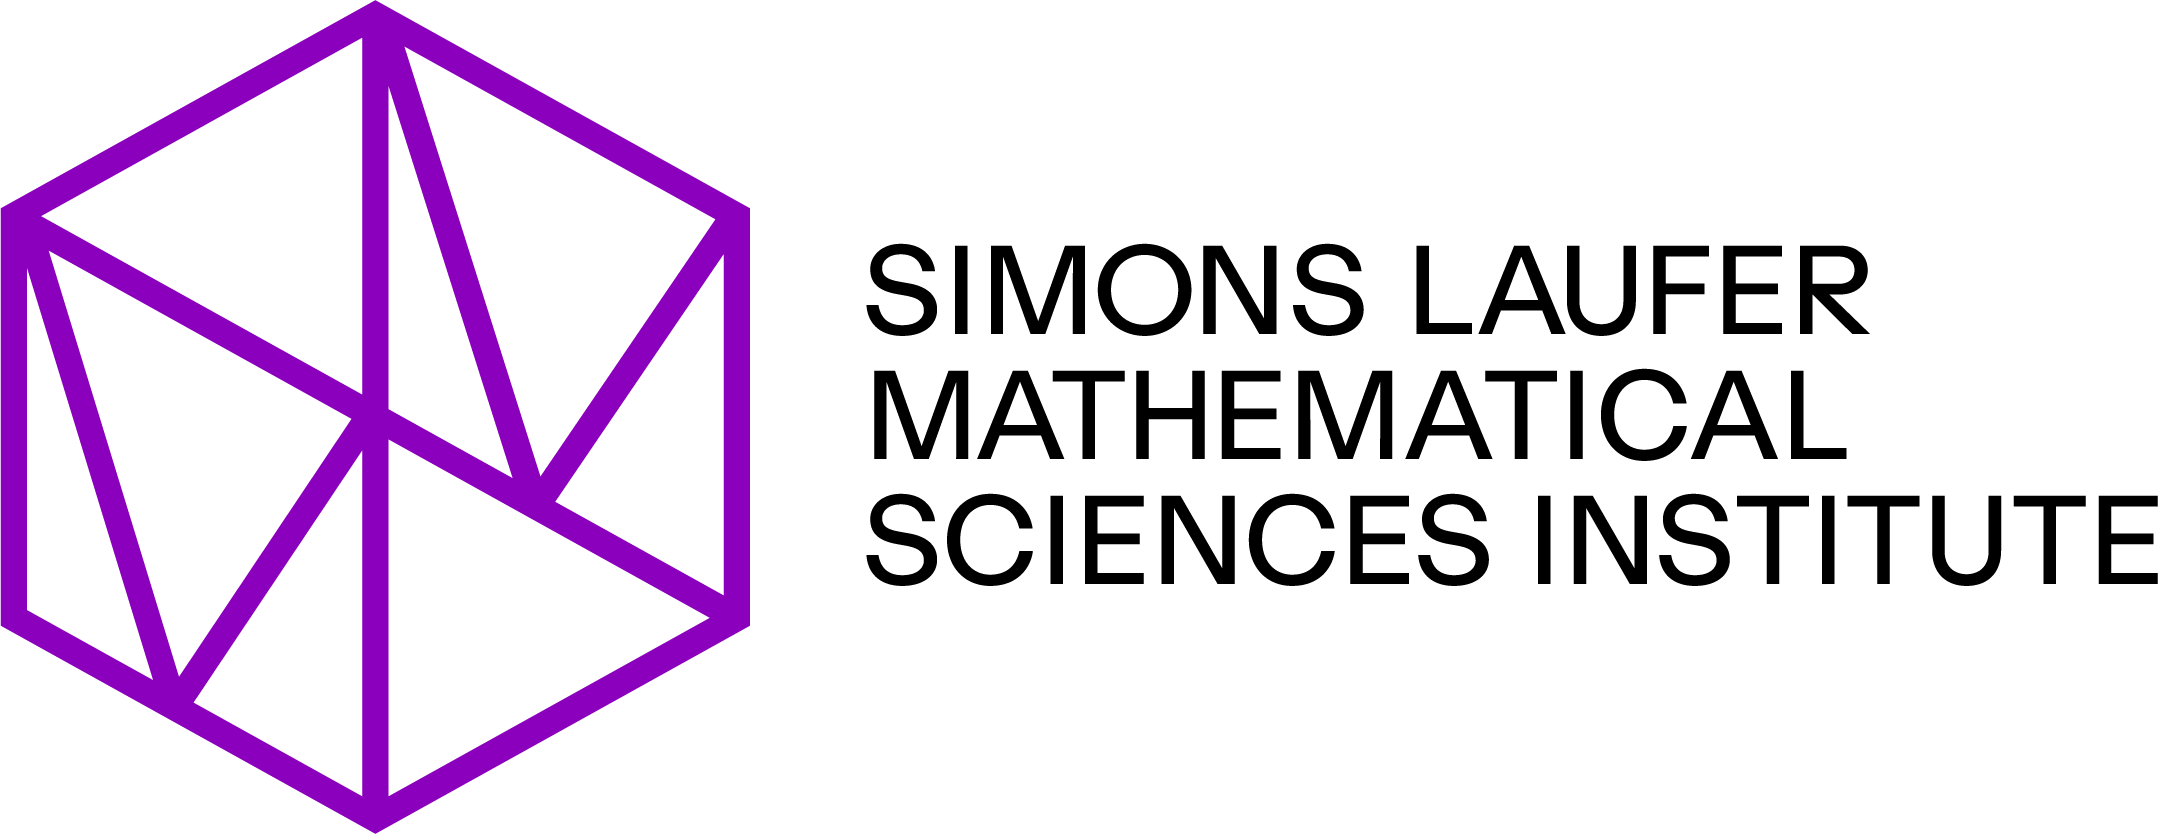 logo for Simons Laufer Mathematical Sciences Institute